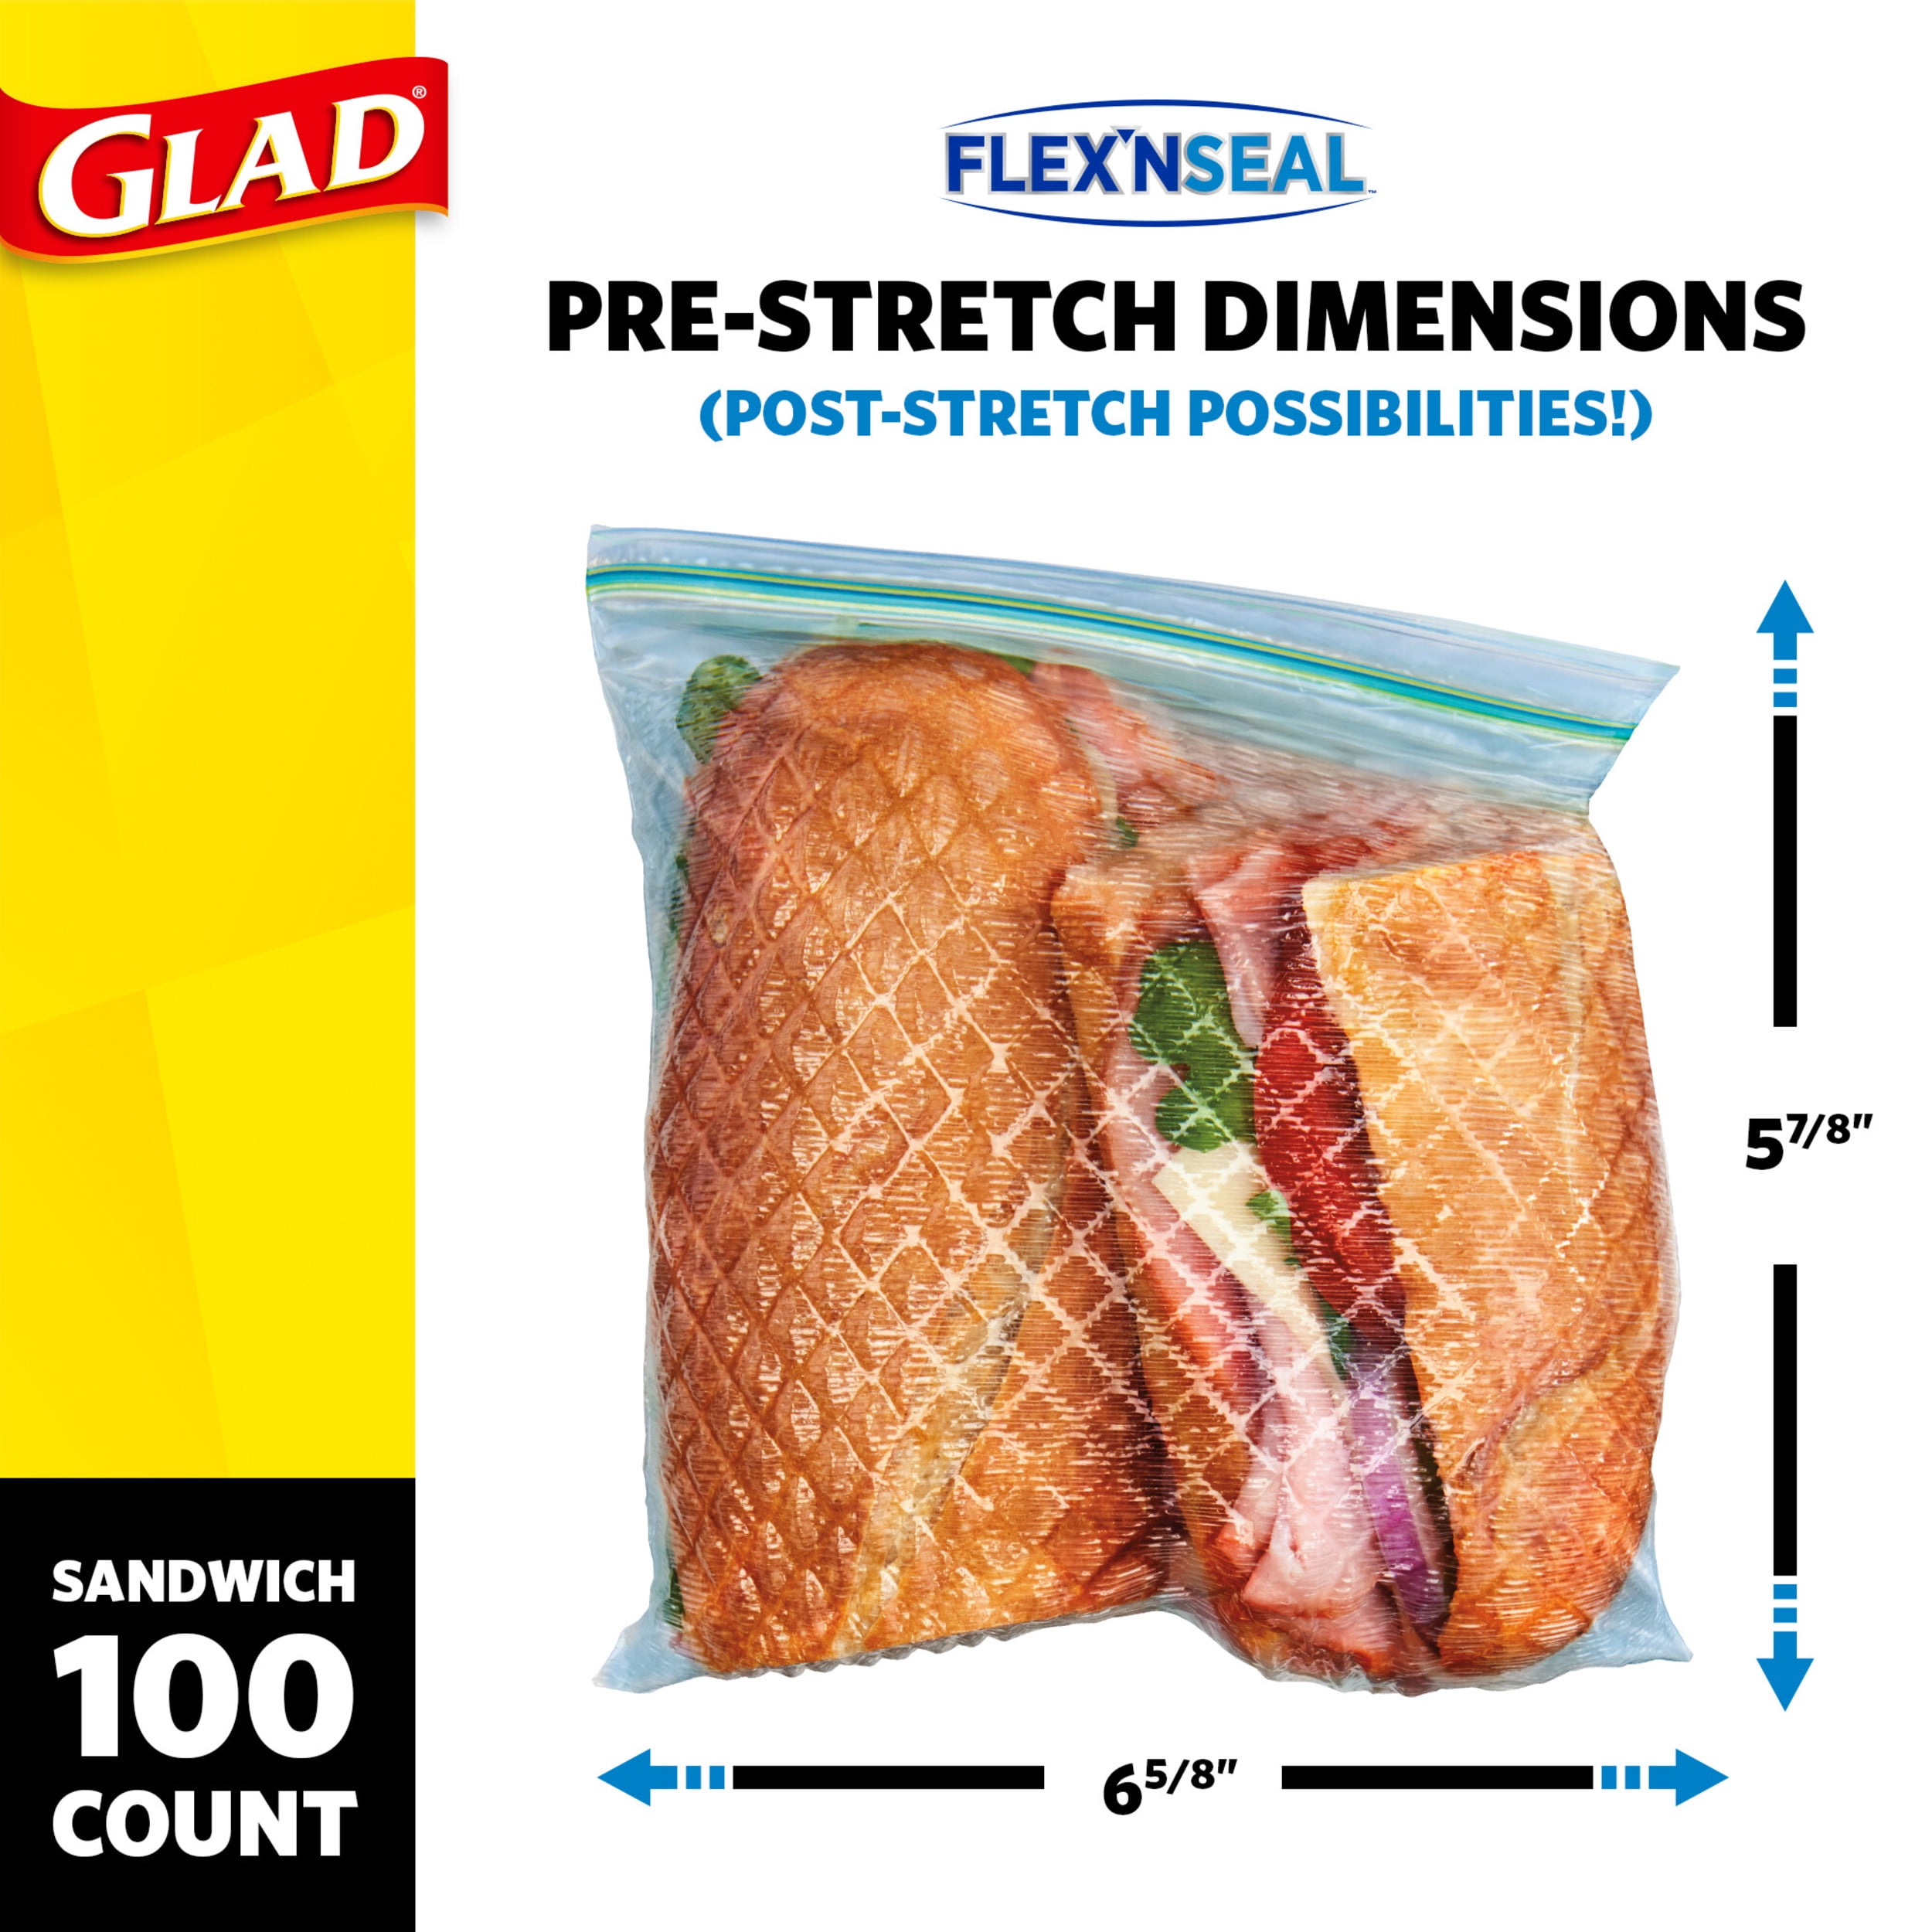 Glad FLEX'NSEAL Zipper Food Storage Sandwich Bags, 100 Count (Pack of 4), 4  pack - Kroger